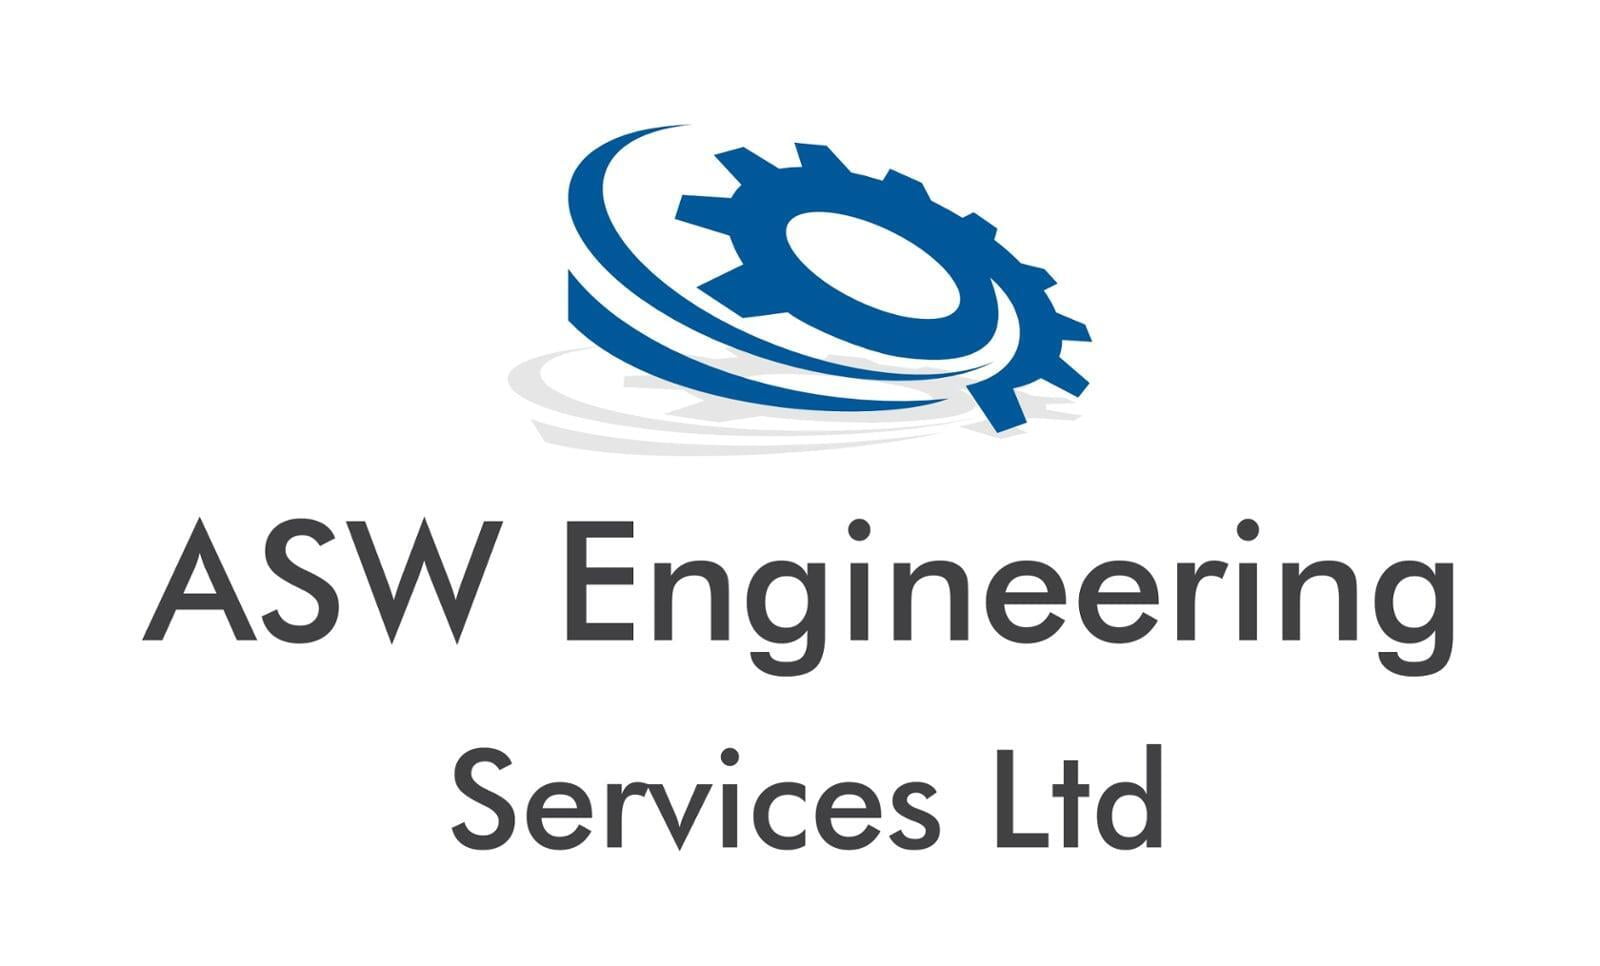 ASW Engineering Services Ltd